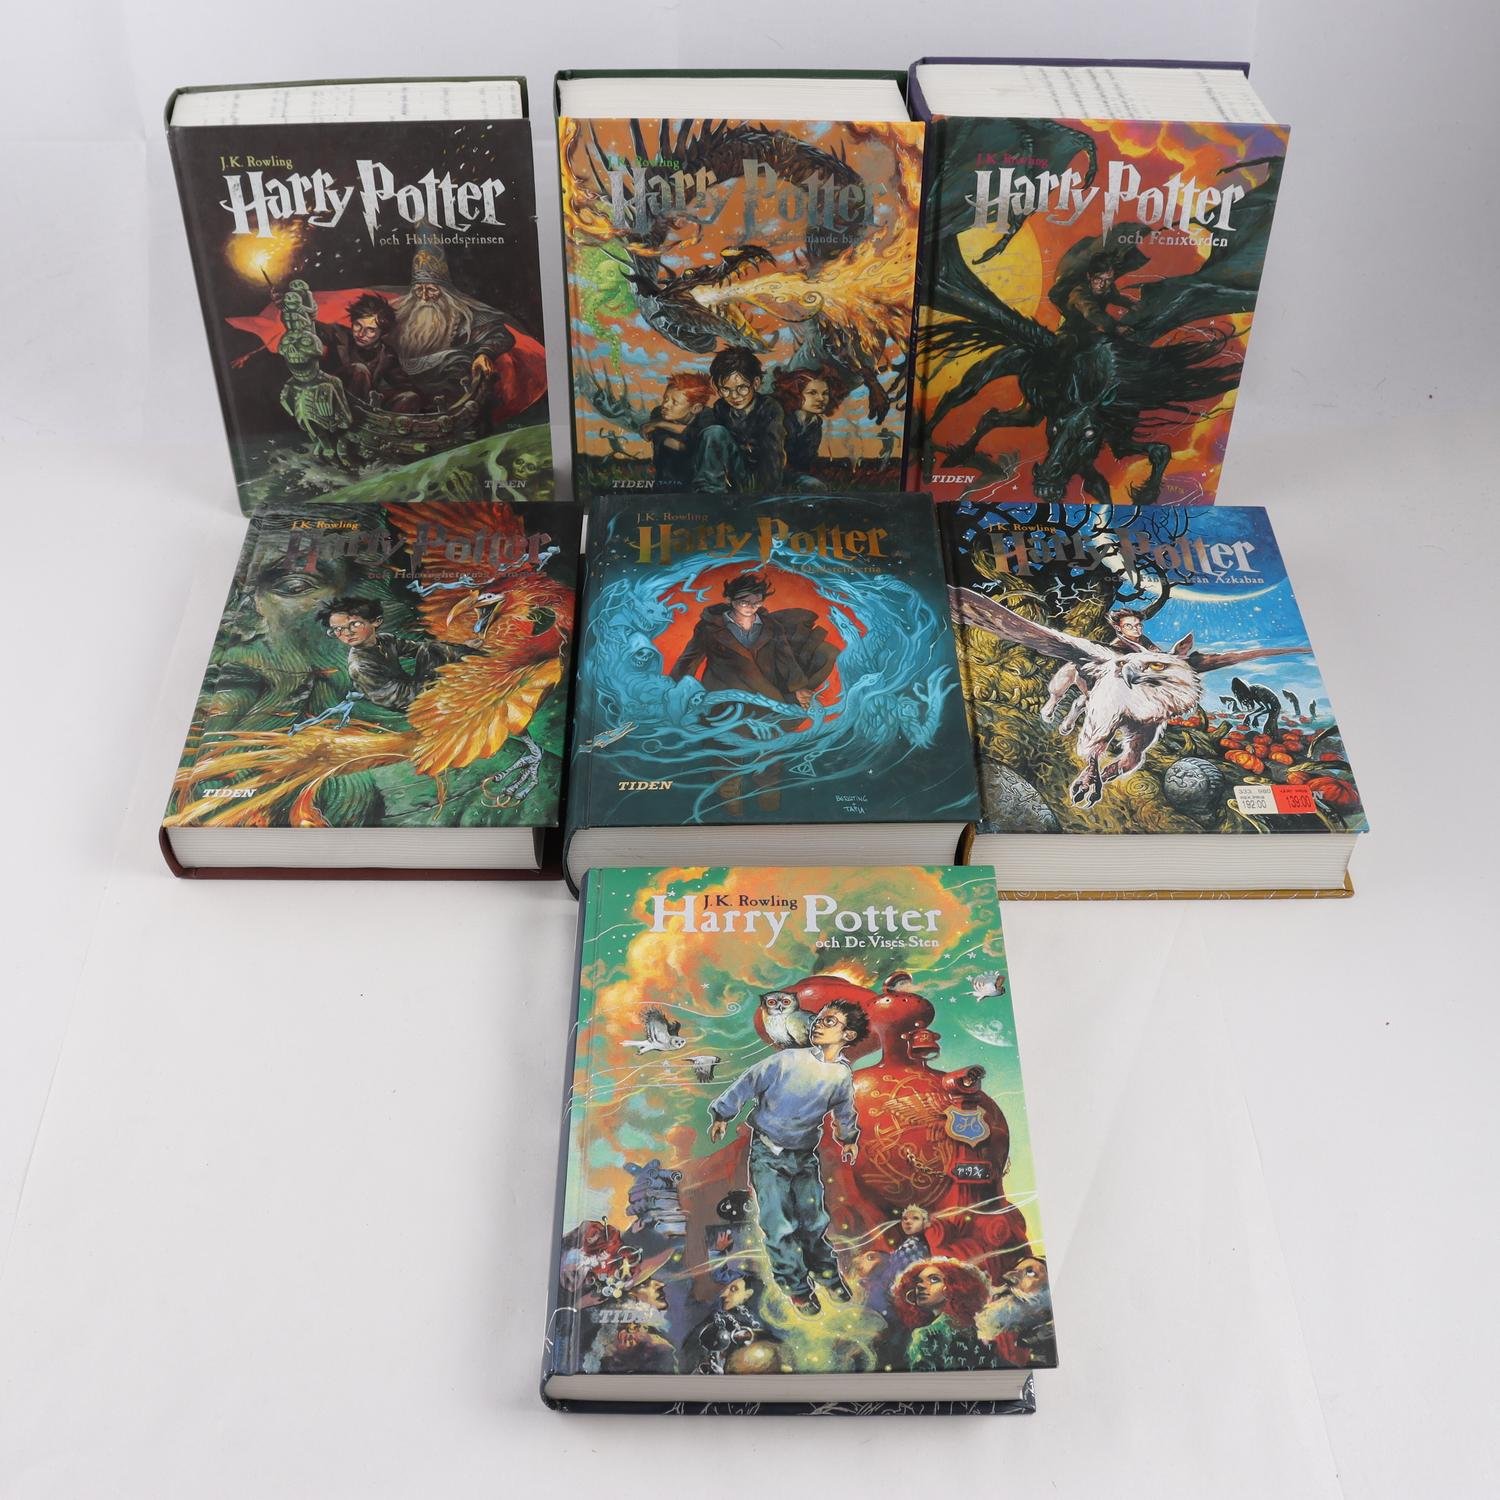 J.K. Rowling, Harry Potter, komplett serie med 7 volymer